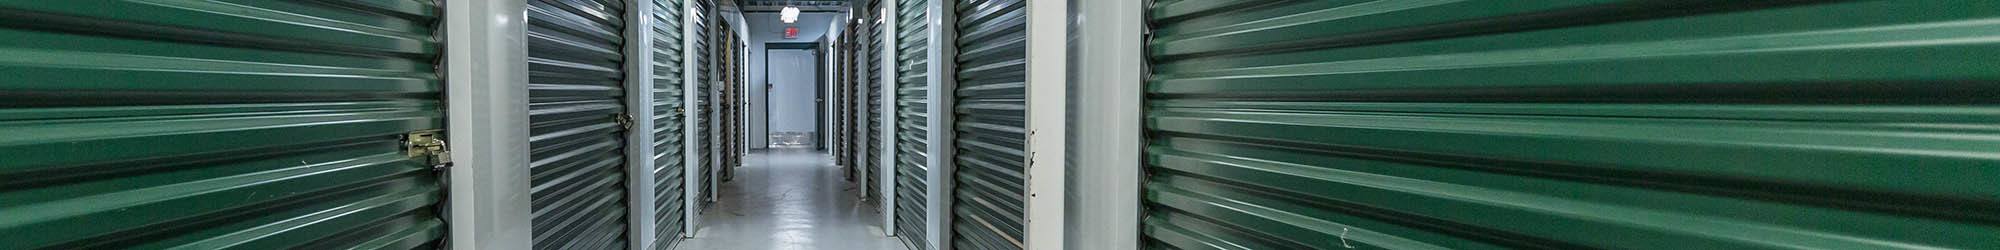 Climate controlled storage at Superior Self Storage in Granite Bay, California